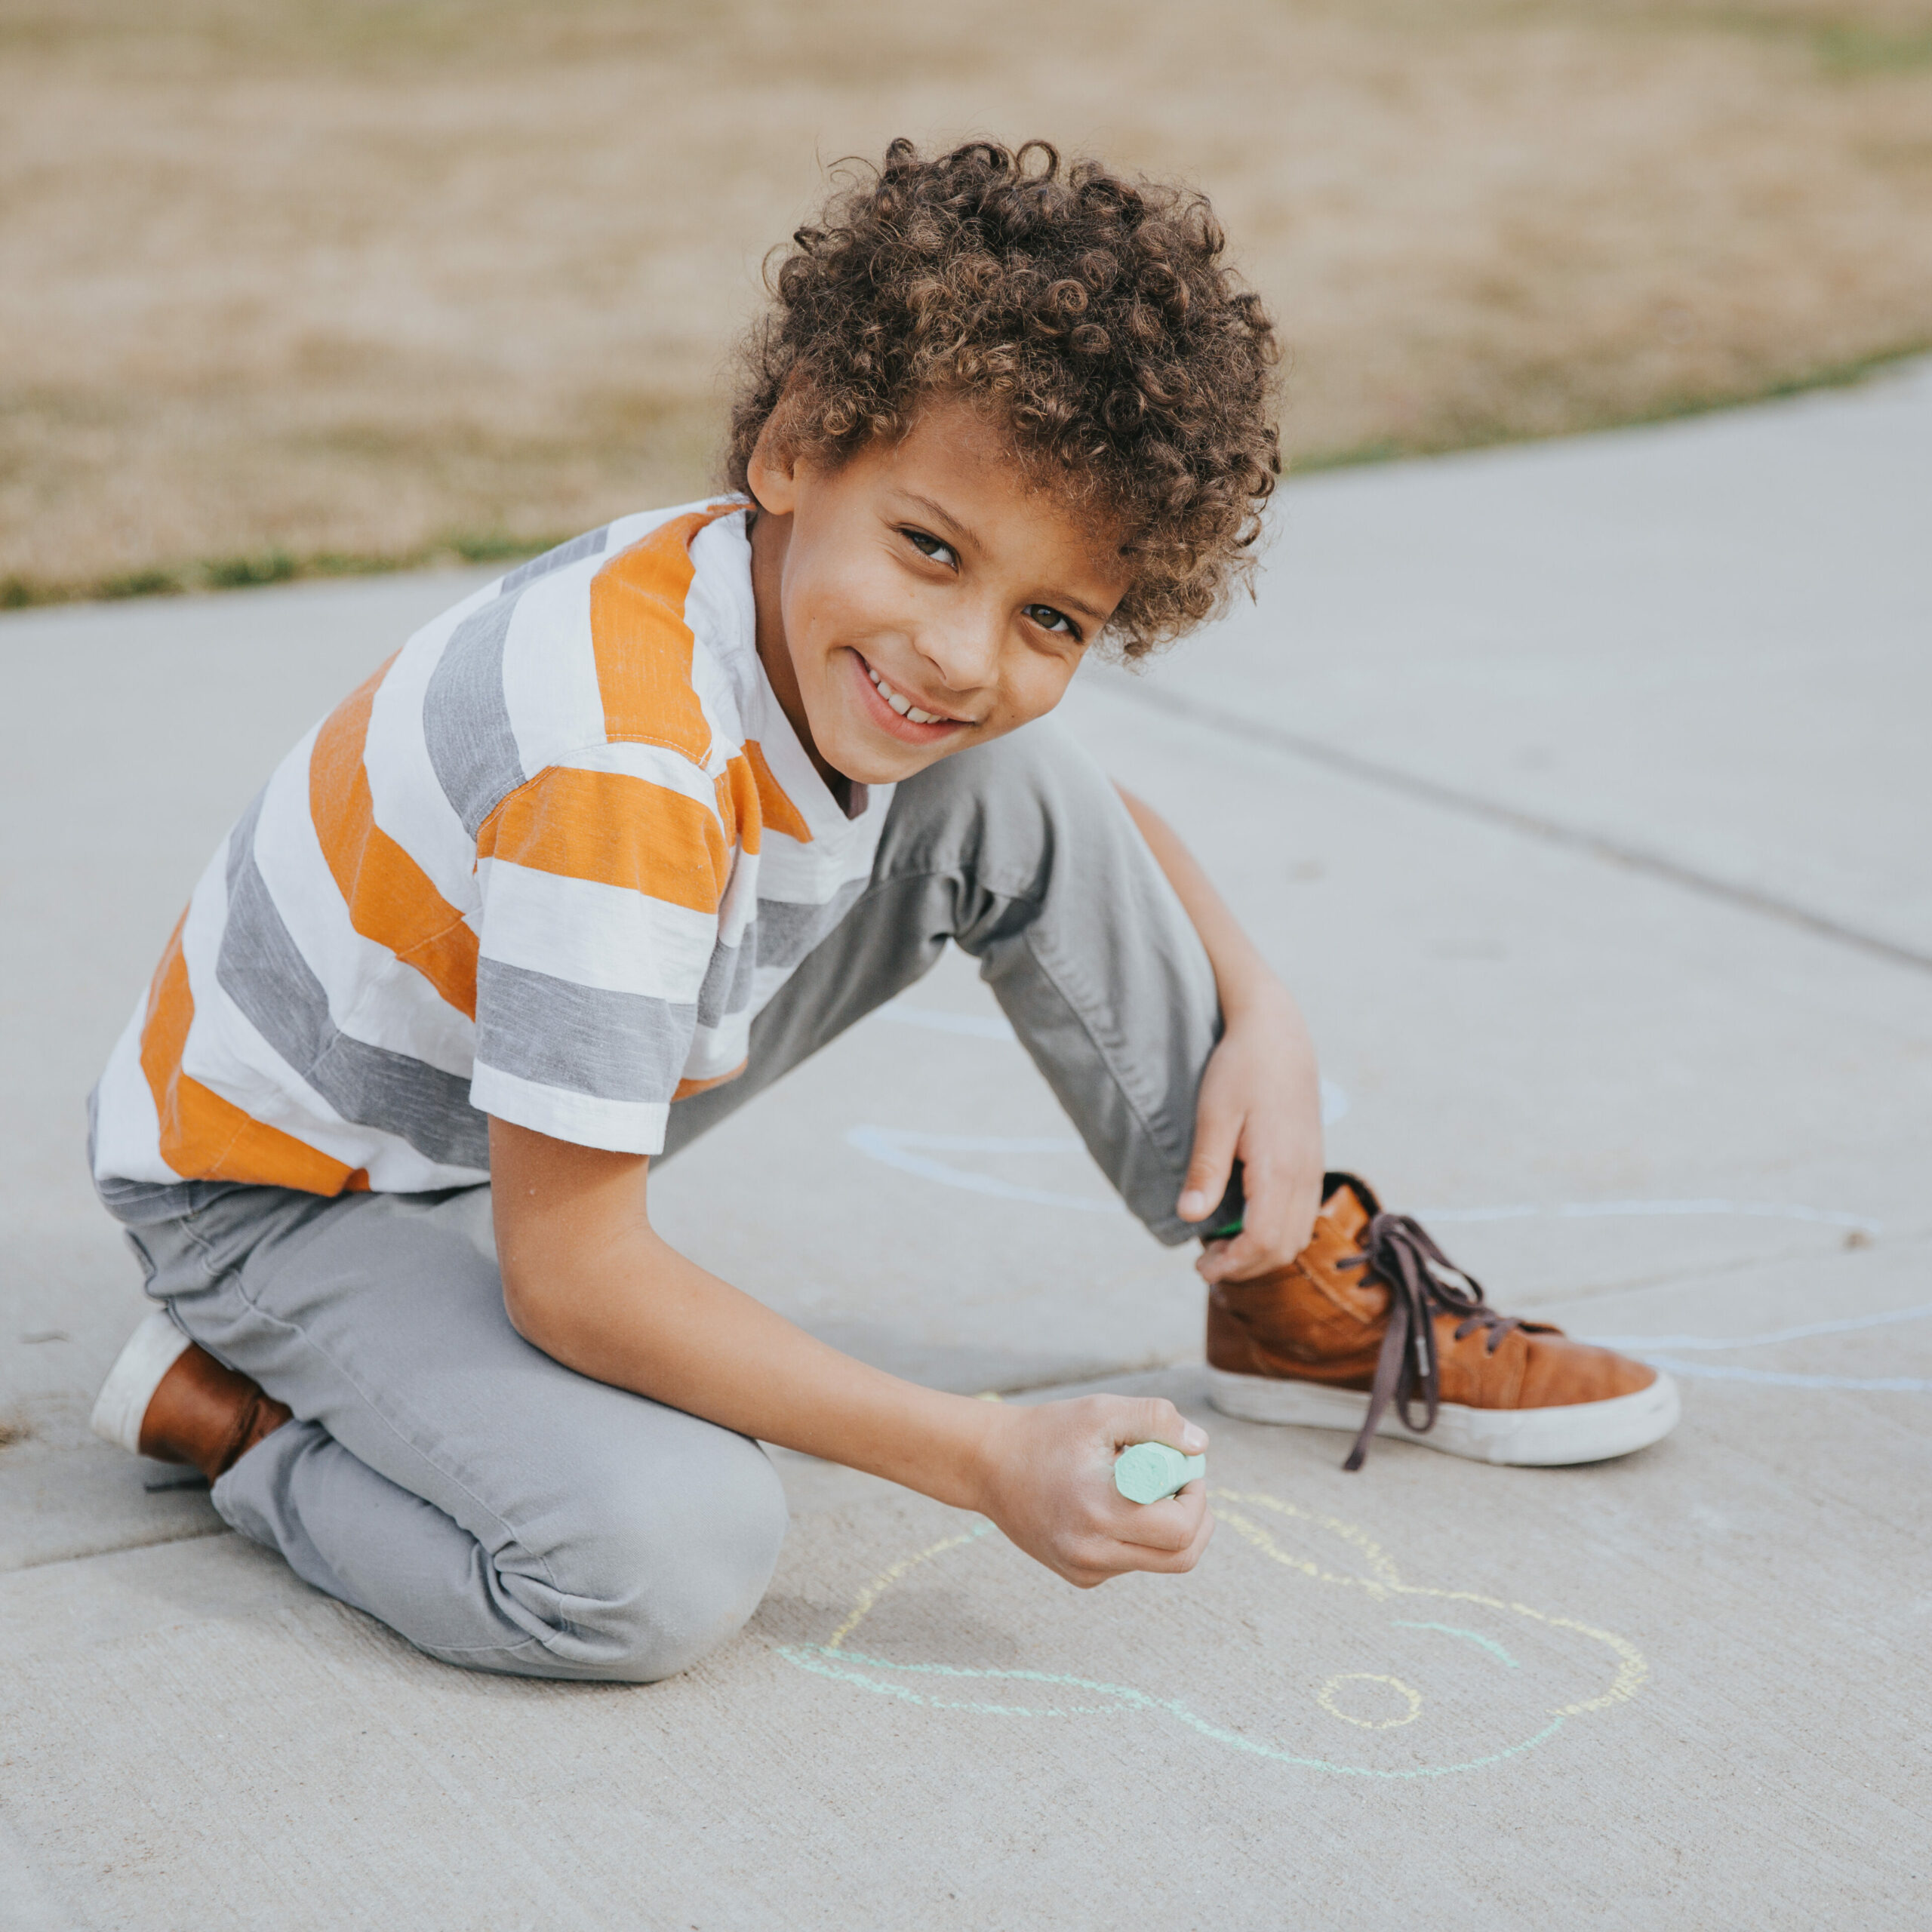 boy coloring on the sidewalk